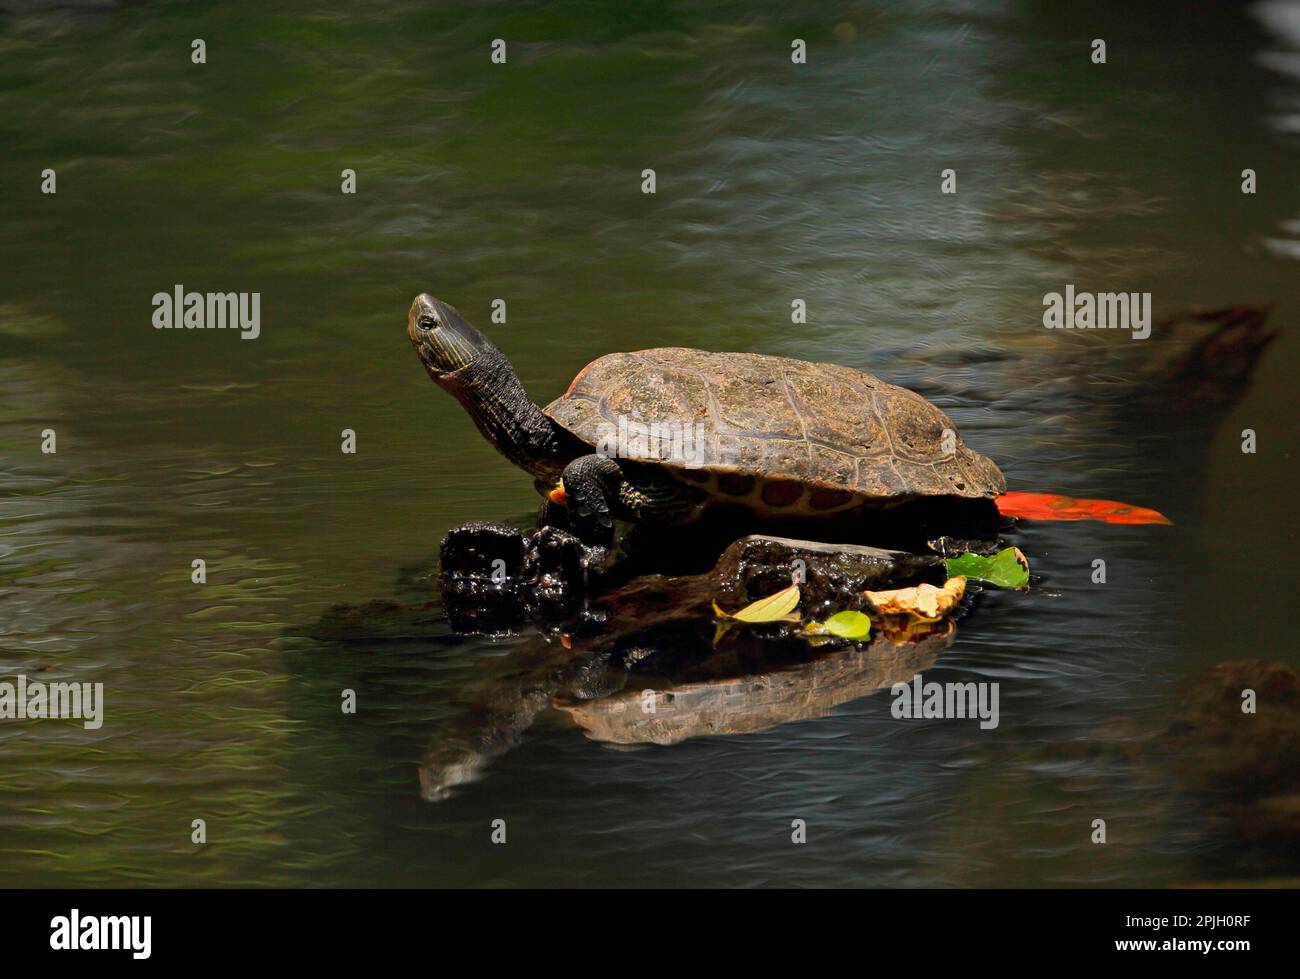 Chinese stripe-necked turtle (Ocadia sinensis), Chinese Stripe-necked Turtles, Other animals, Reptiles, Turtles, Animals, Water Turtles, Chinese Stock Photo